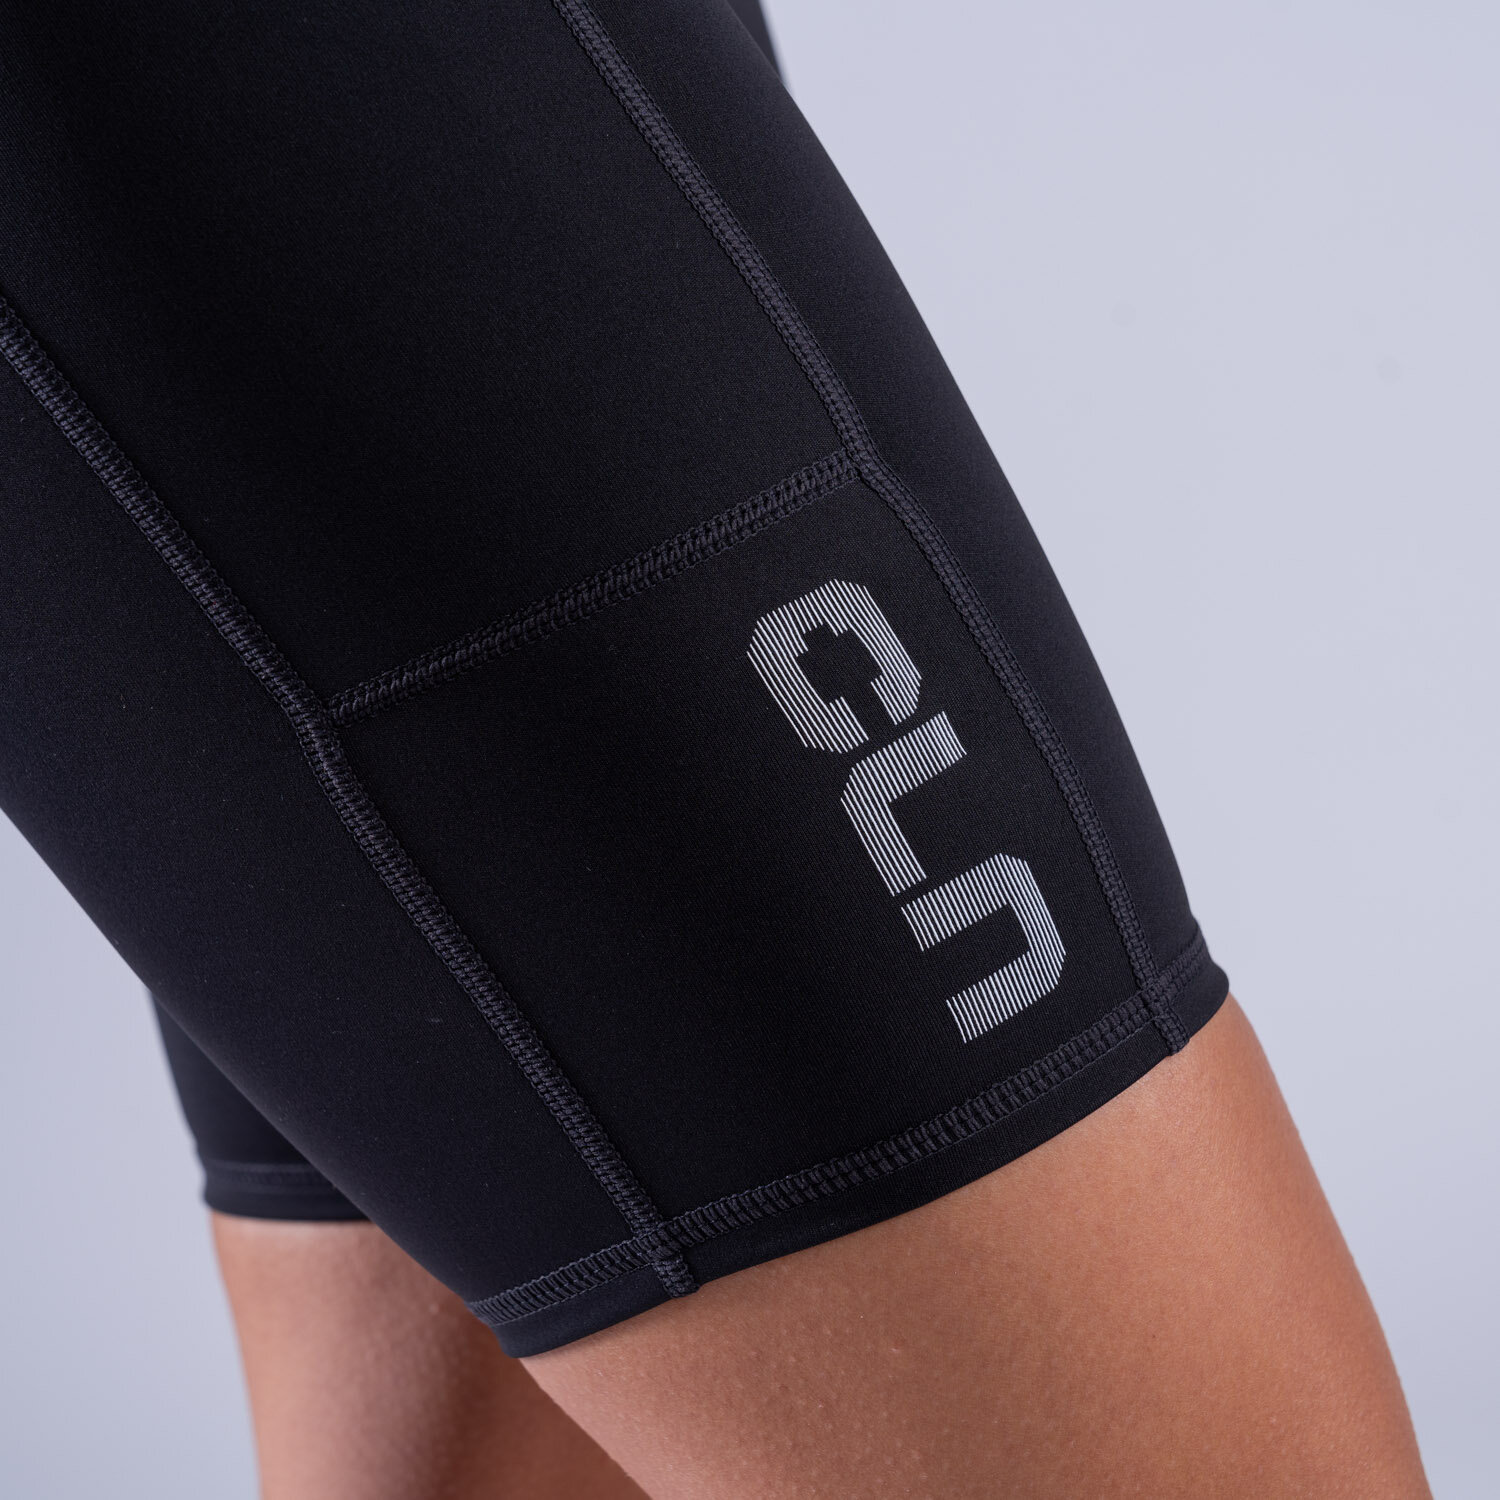 CLN Bike ws pocket shorts Charcoal